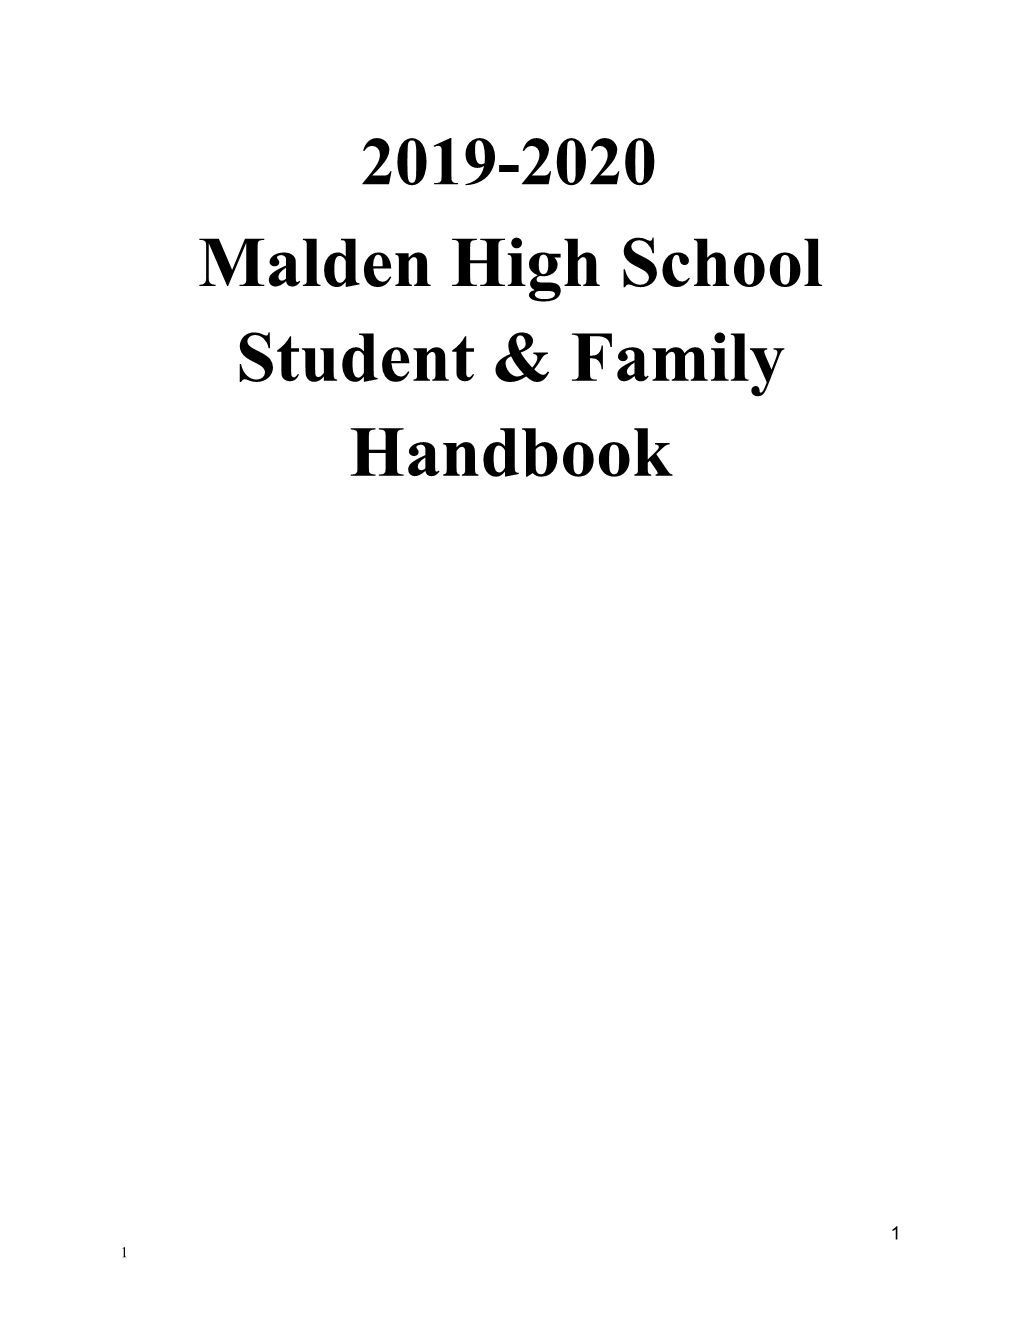 Malden High School Student & Family Handbook